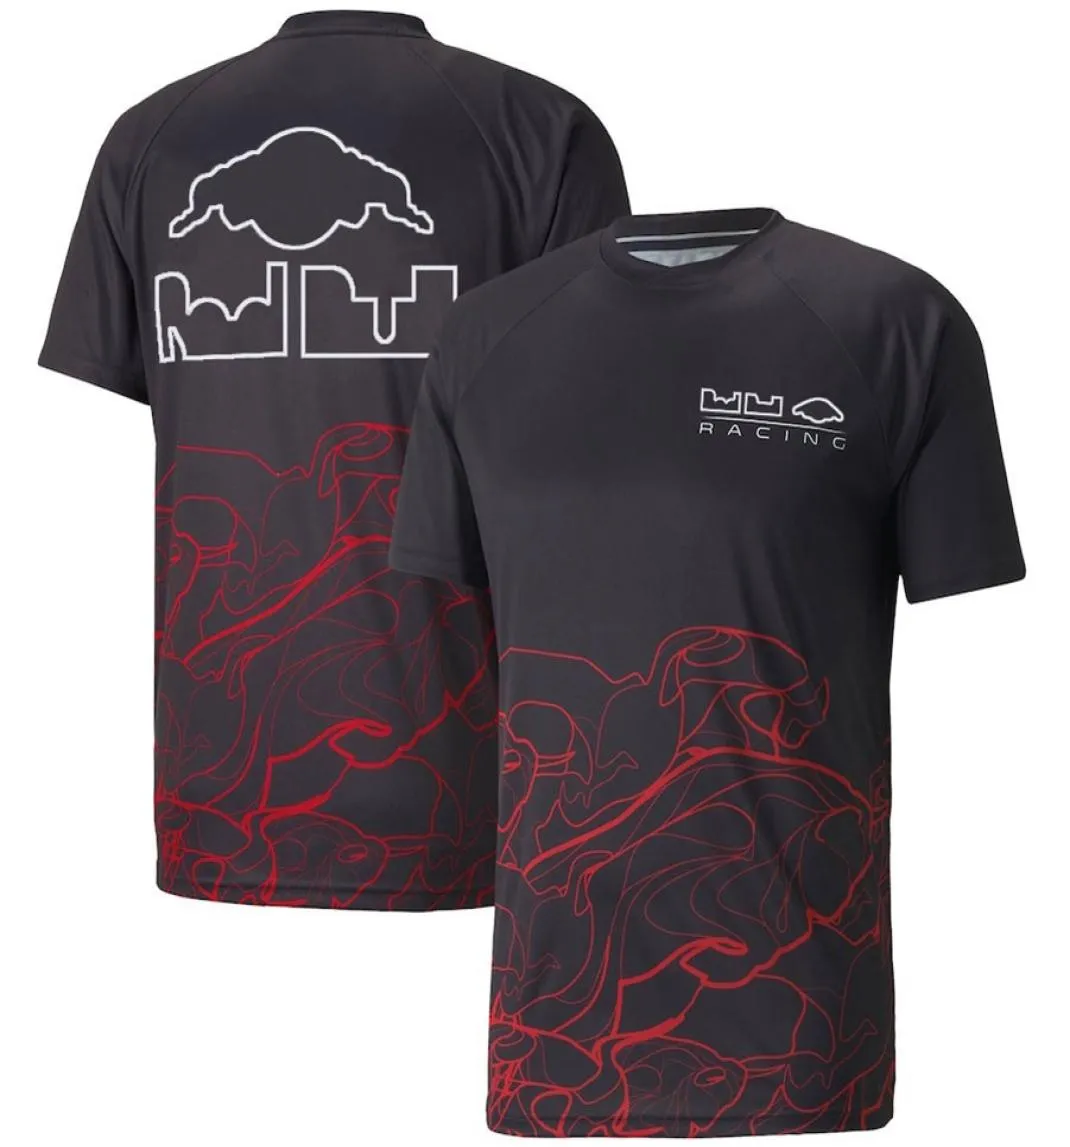 2022 1 terno de corrida nova camiseta uniformes de equipe manga curta piloto personalizado mesmo estilo fãs de carros casuais camisetas grandes motorsport logotipo da equipe jersey1986425